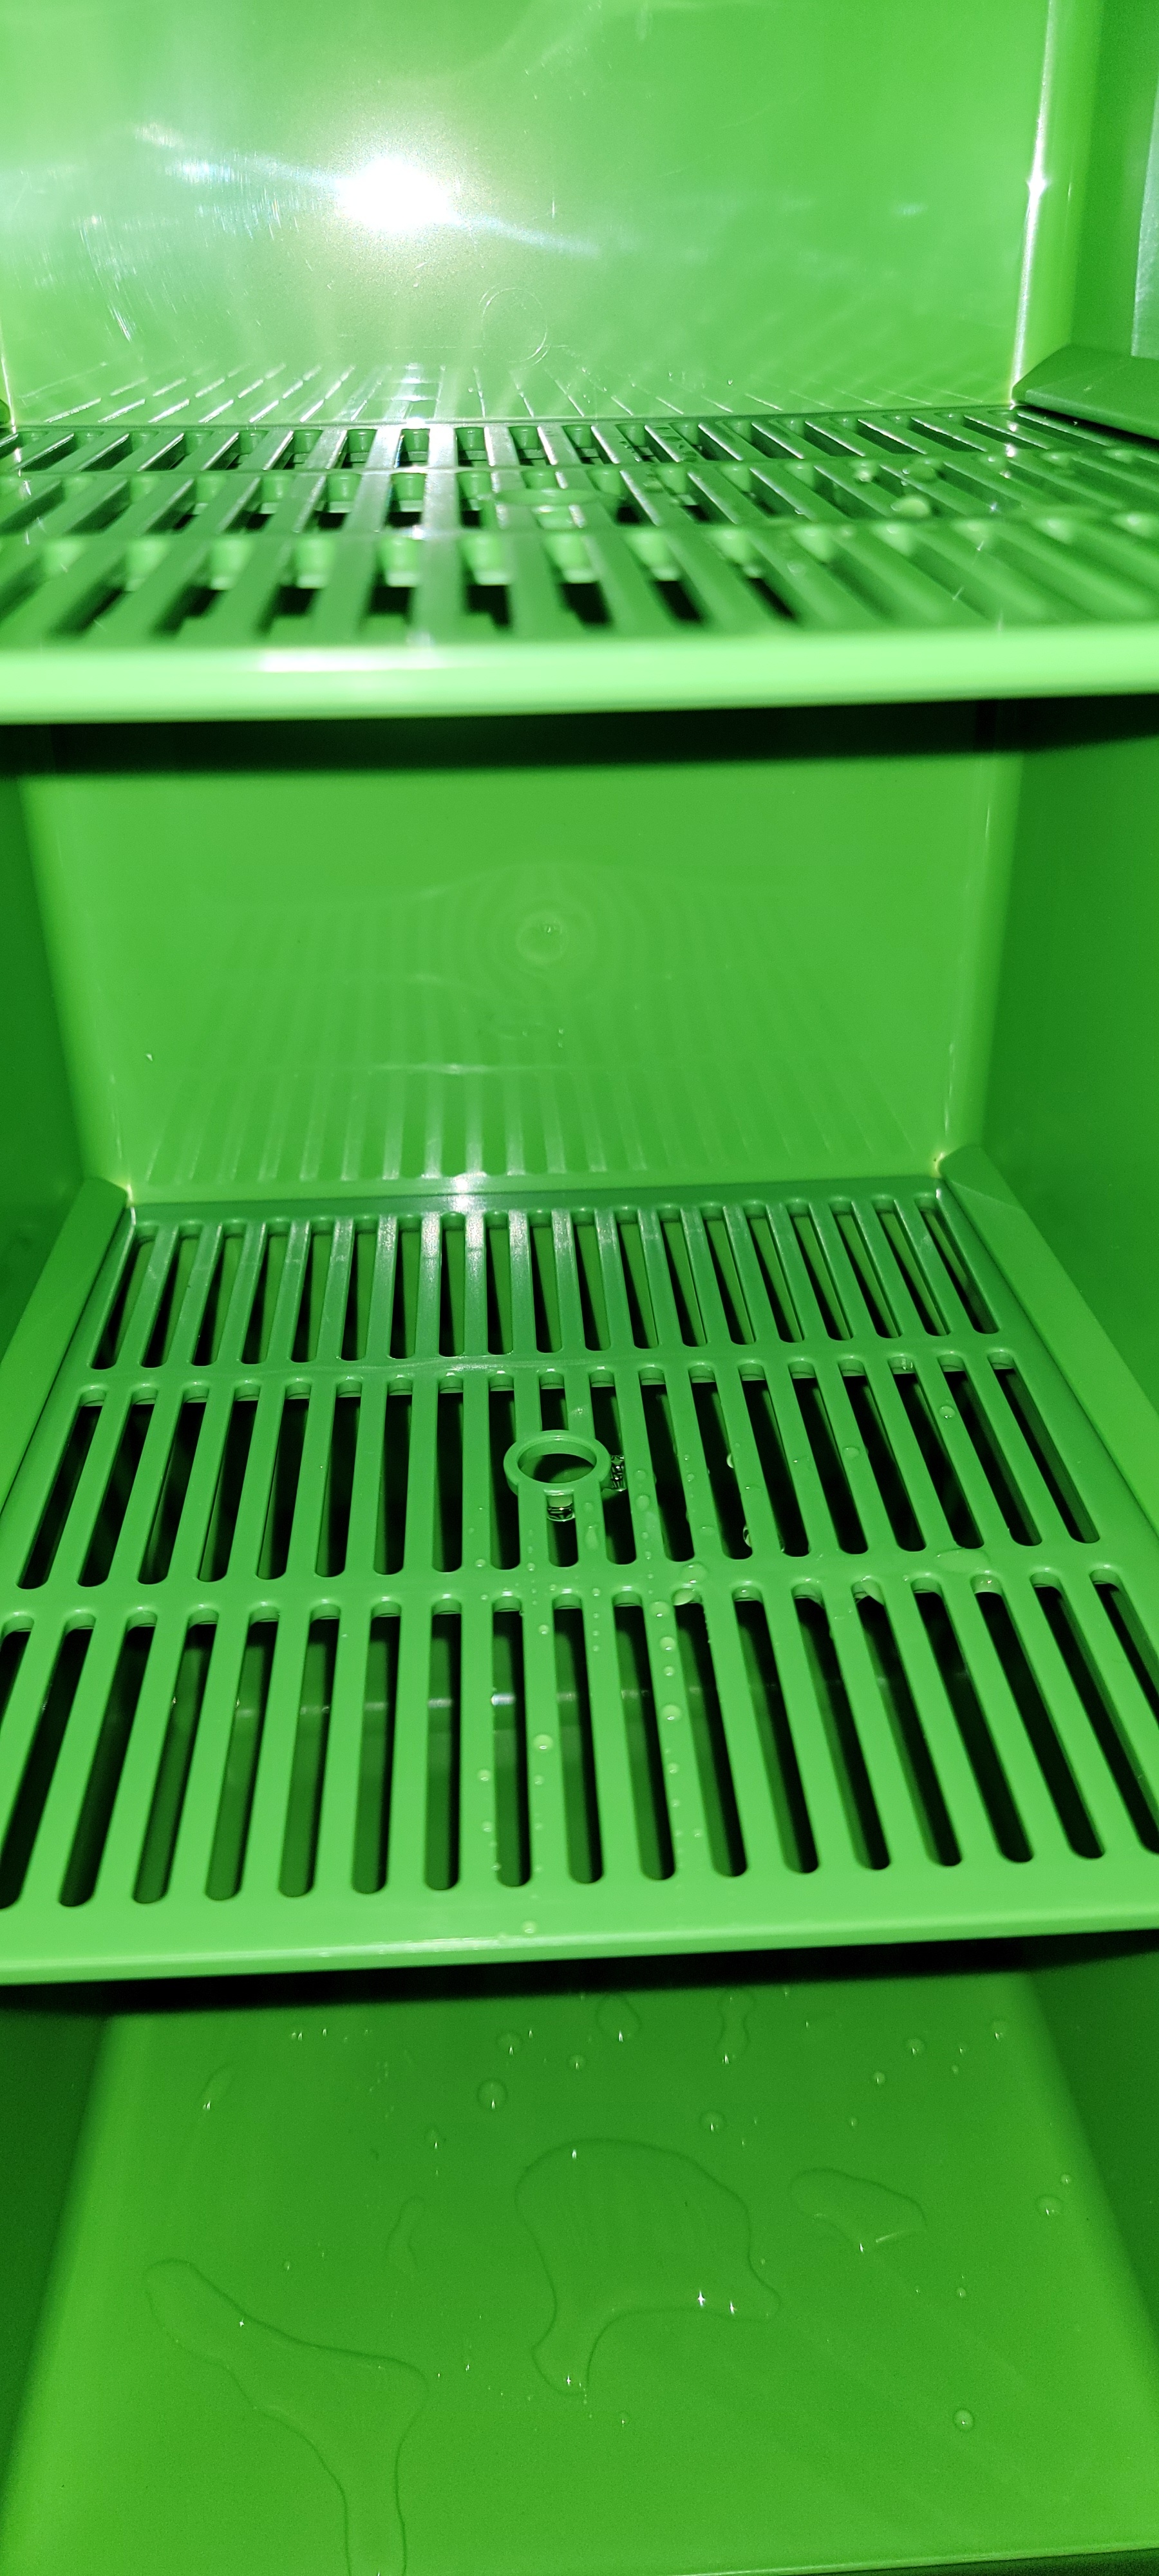 Mini frigo Xbox série x - Xbox